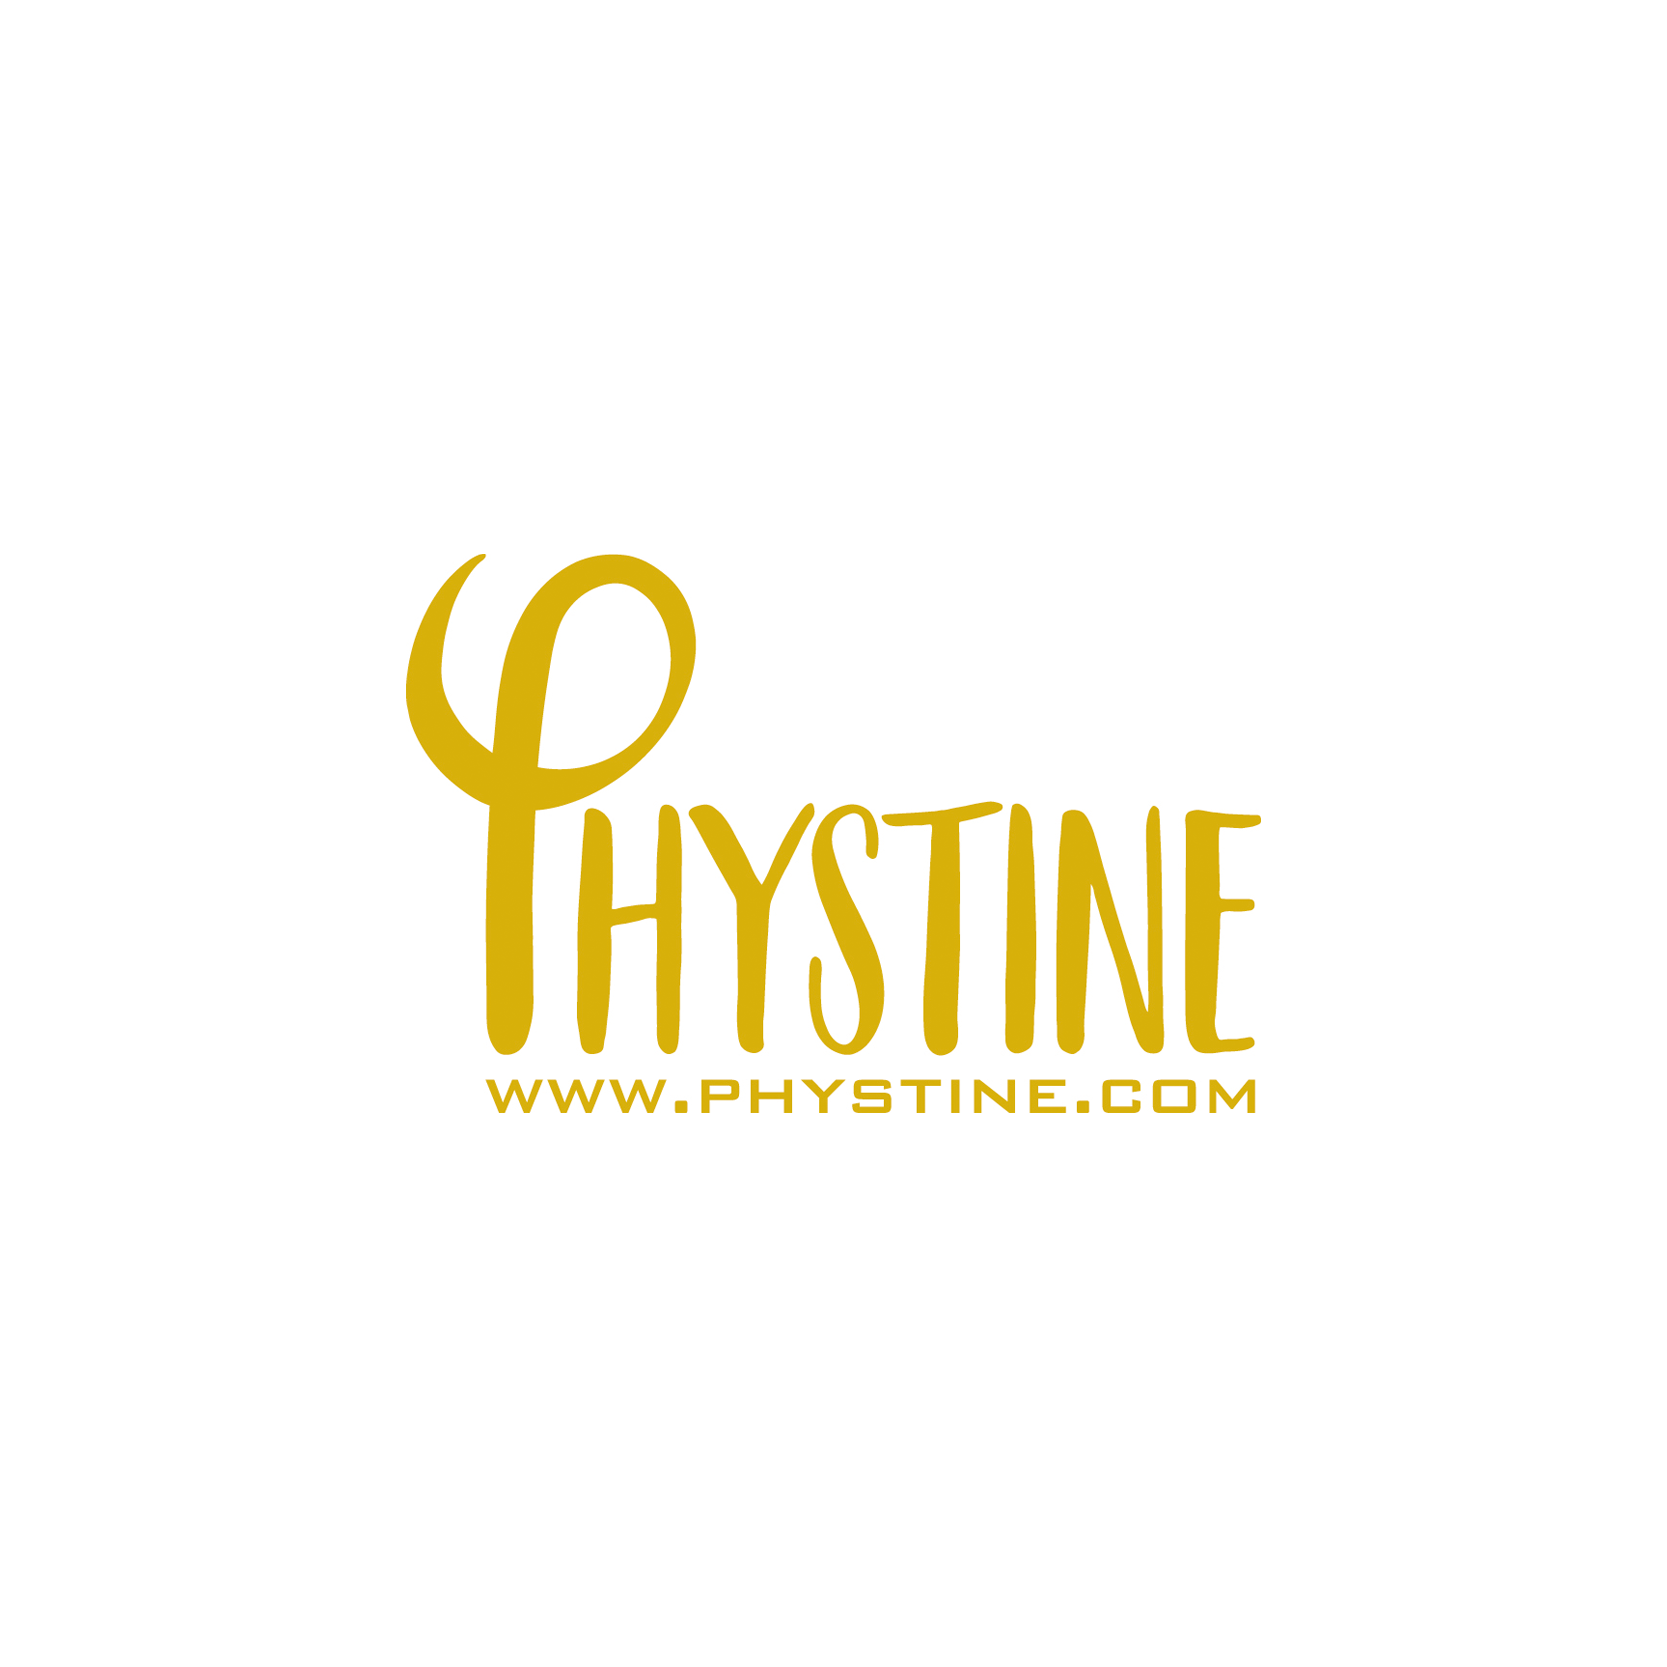 Phystine logo web